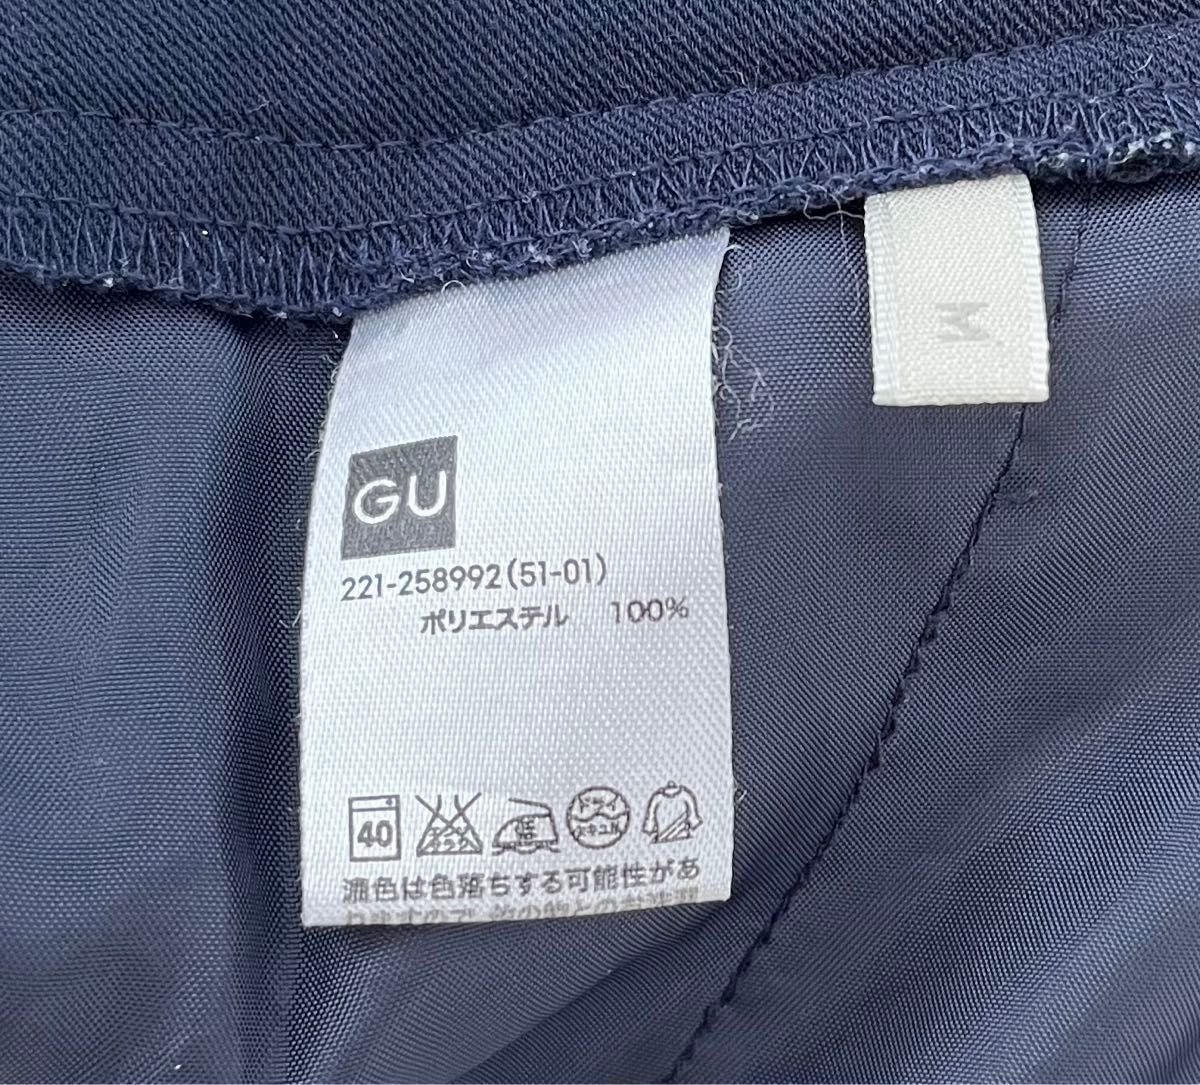 Mサイズ GU ジーユー ショートパンツ キュロット ネイビー 紺色 レディース パンツ ポケット付き ファスナー ジップアップ